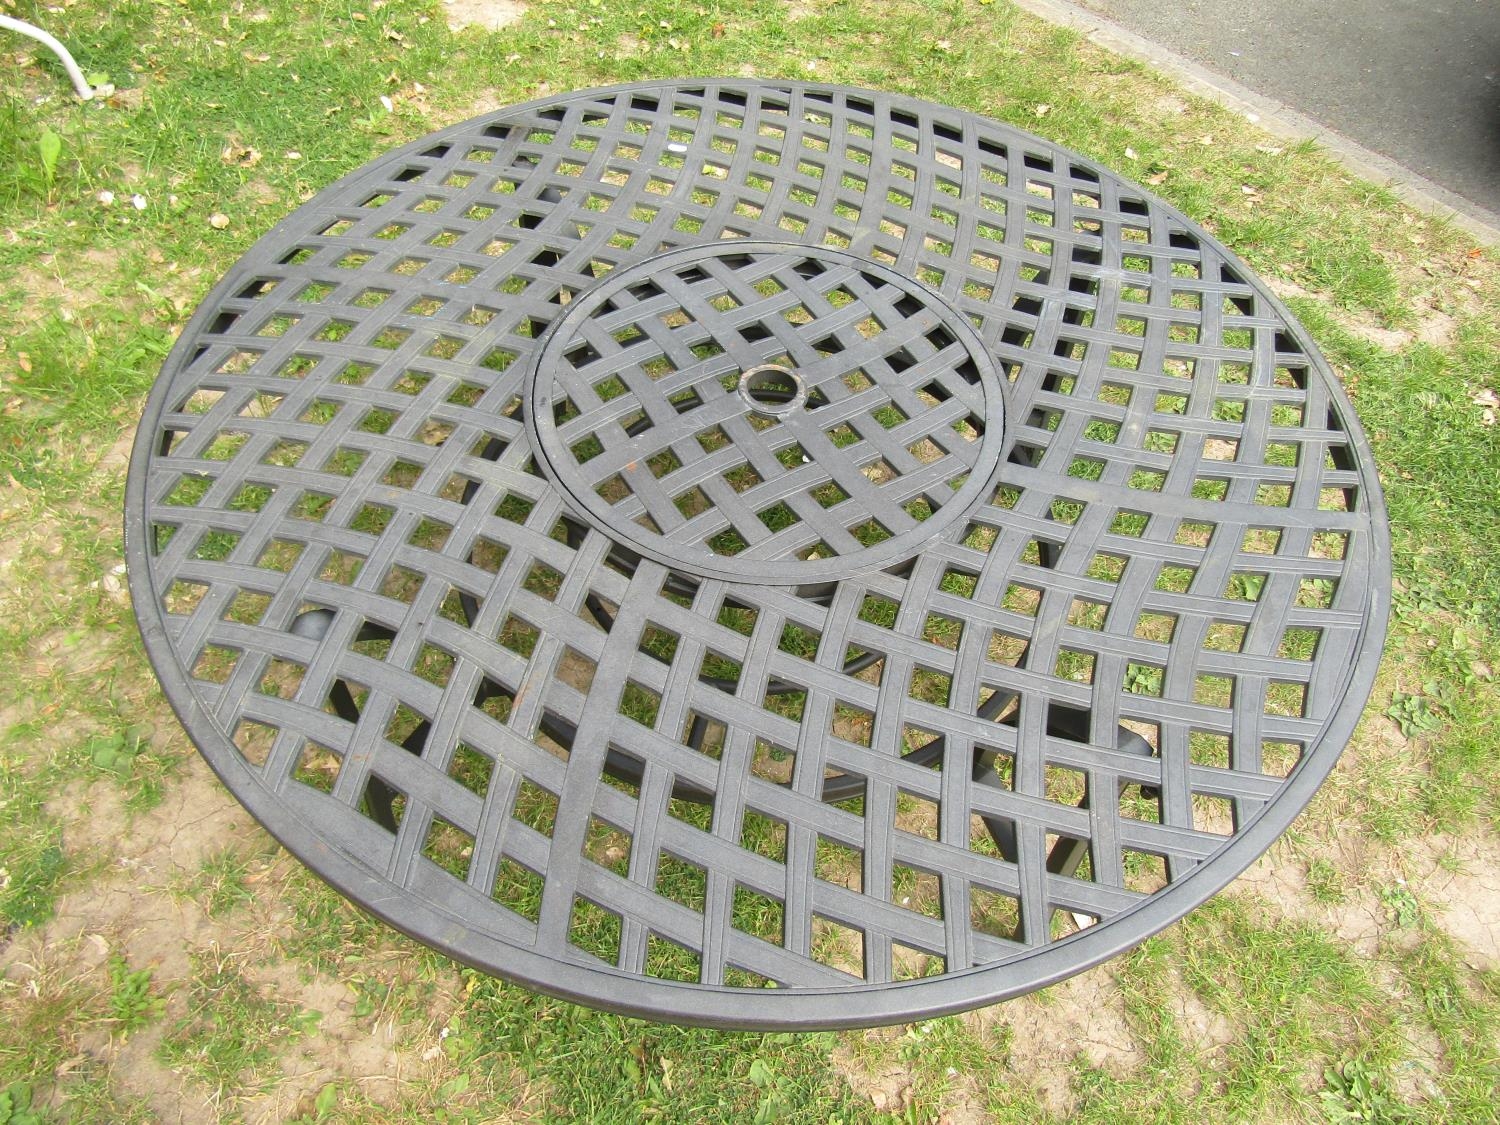 A low contemporary circular garden table with pierced lattice top 132 cm diameter x 53 cm high - Image 2 of 2